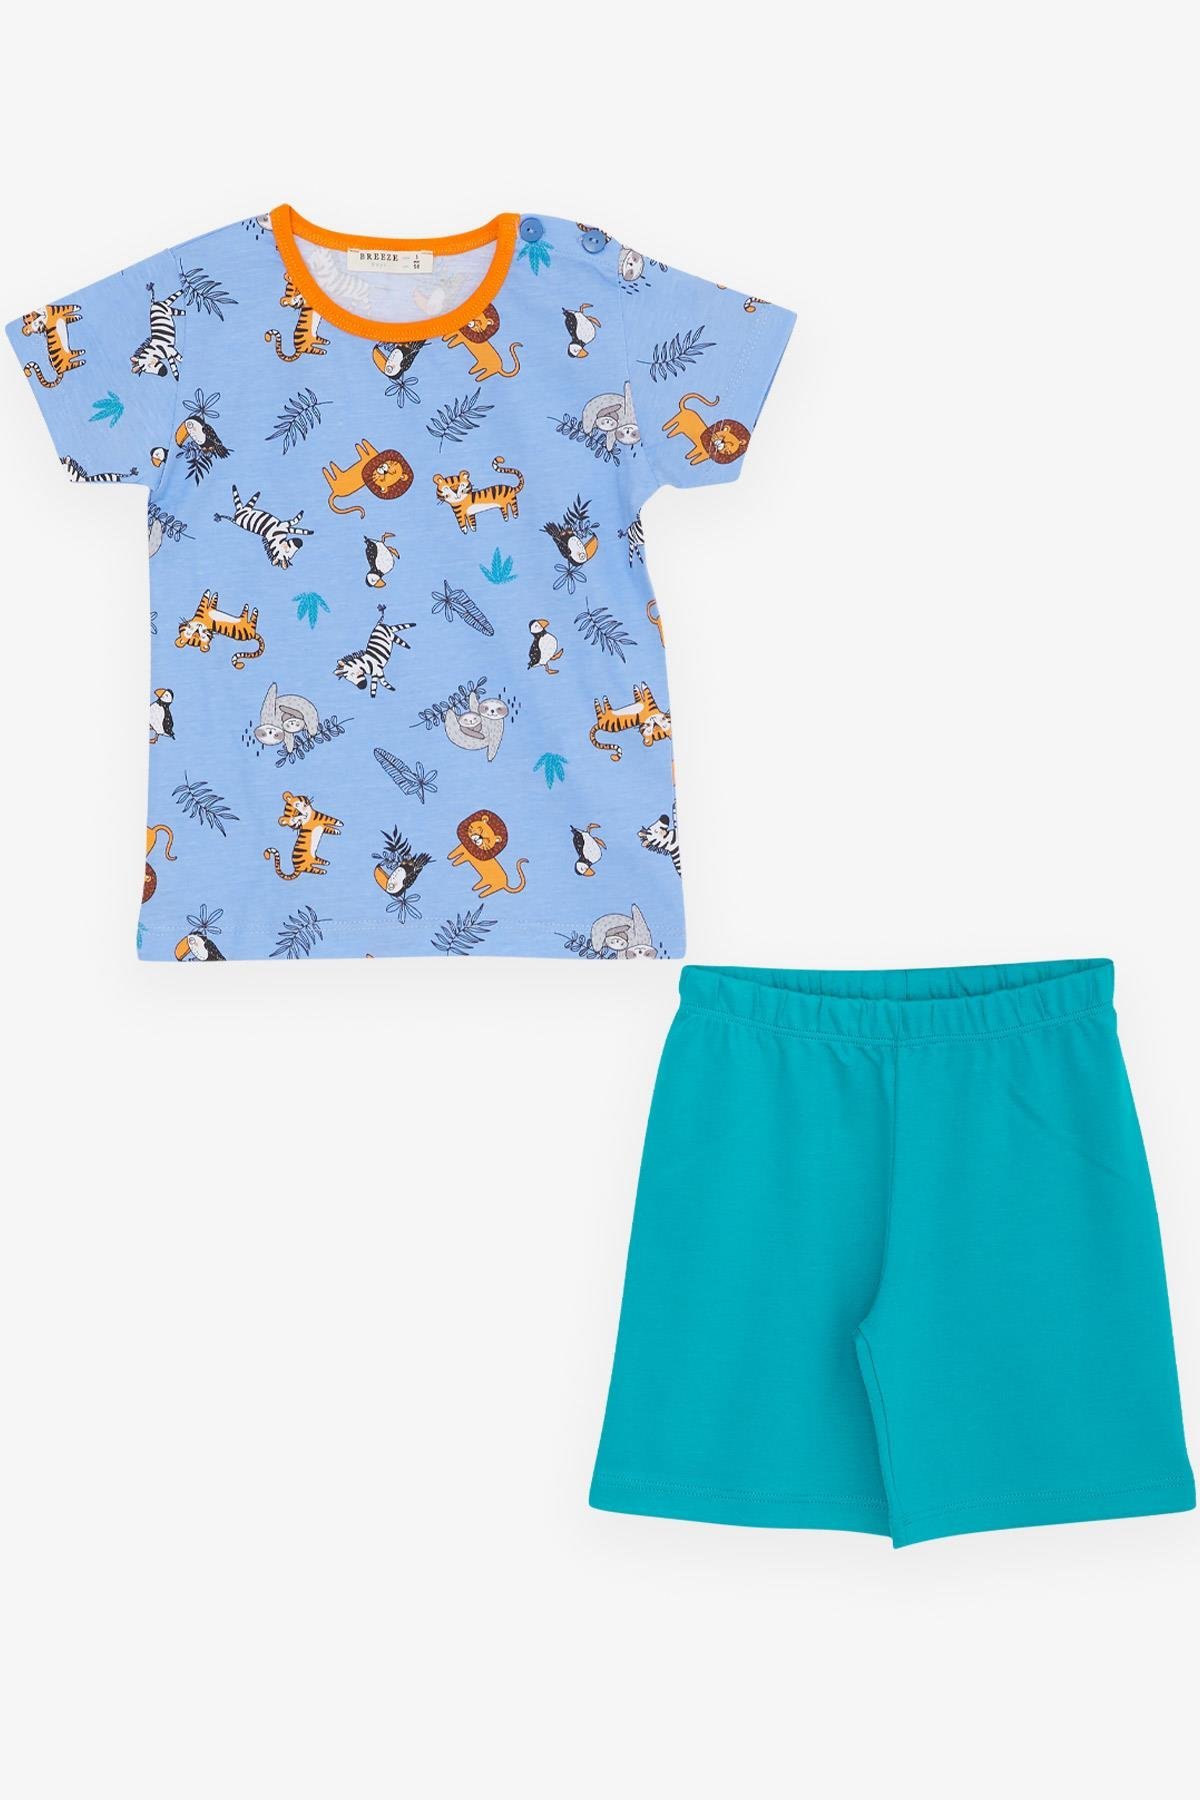 Trendy Shop Αγορίστικες πιτζάμες με ζωάκια (09 μηνών-3 ετών)